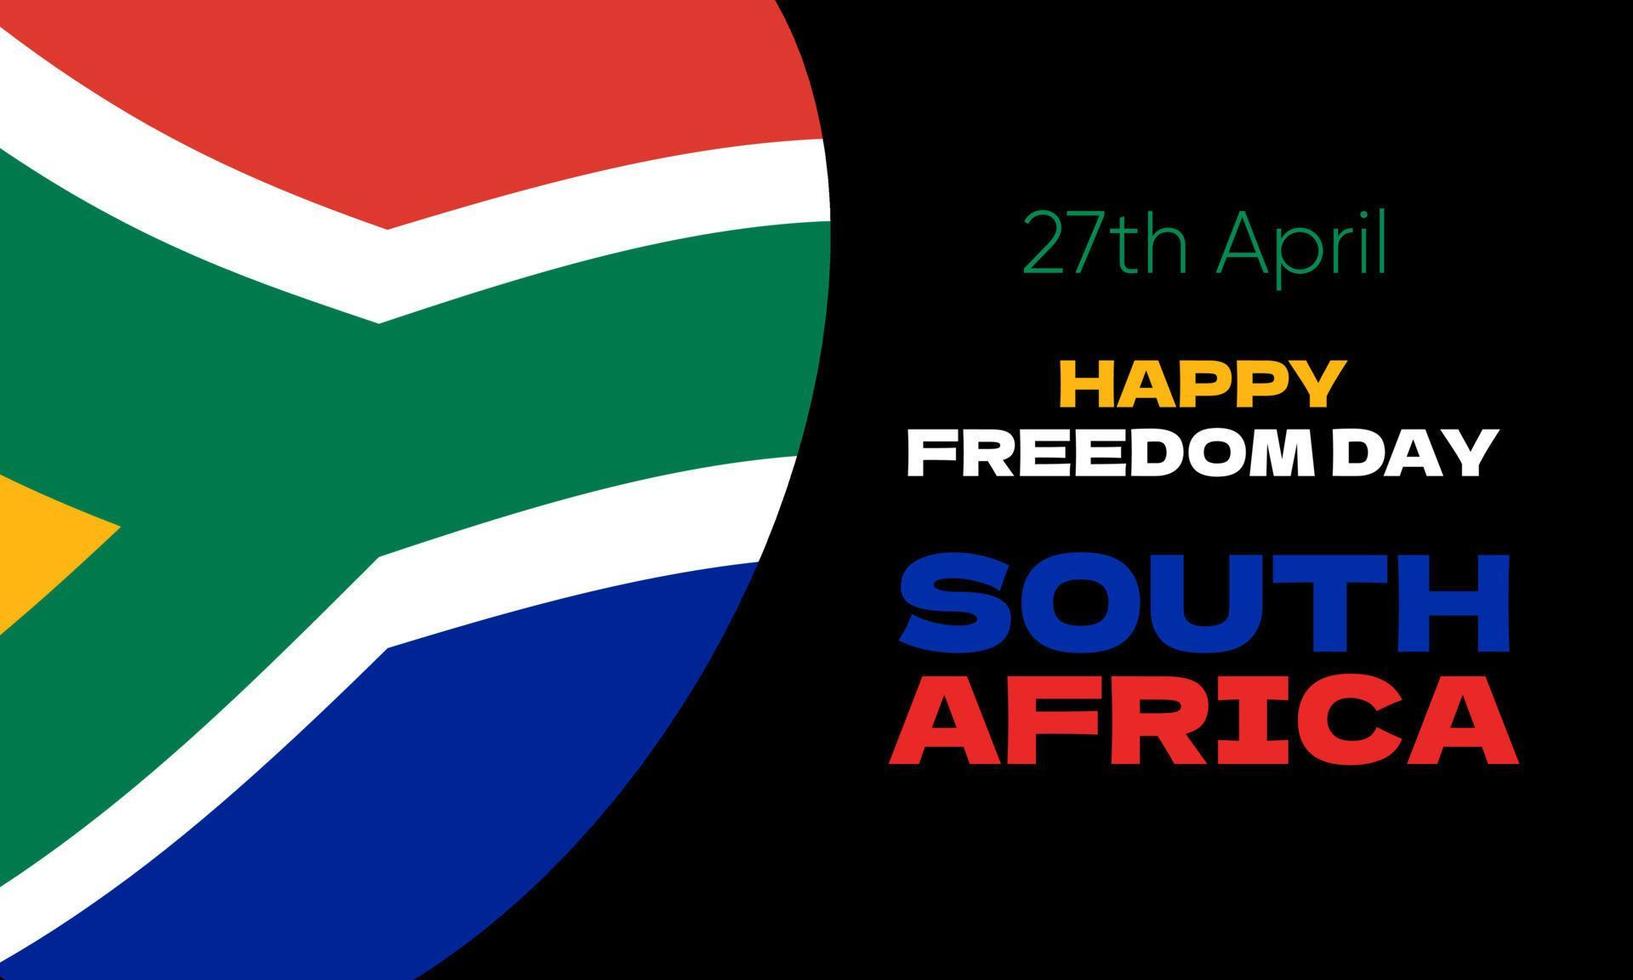 South Africa Freedom Day Afrikaans Vryheidsdag Background, poster, card, banner design. vector